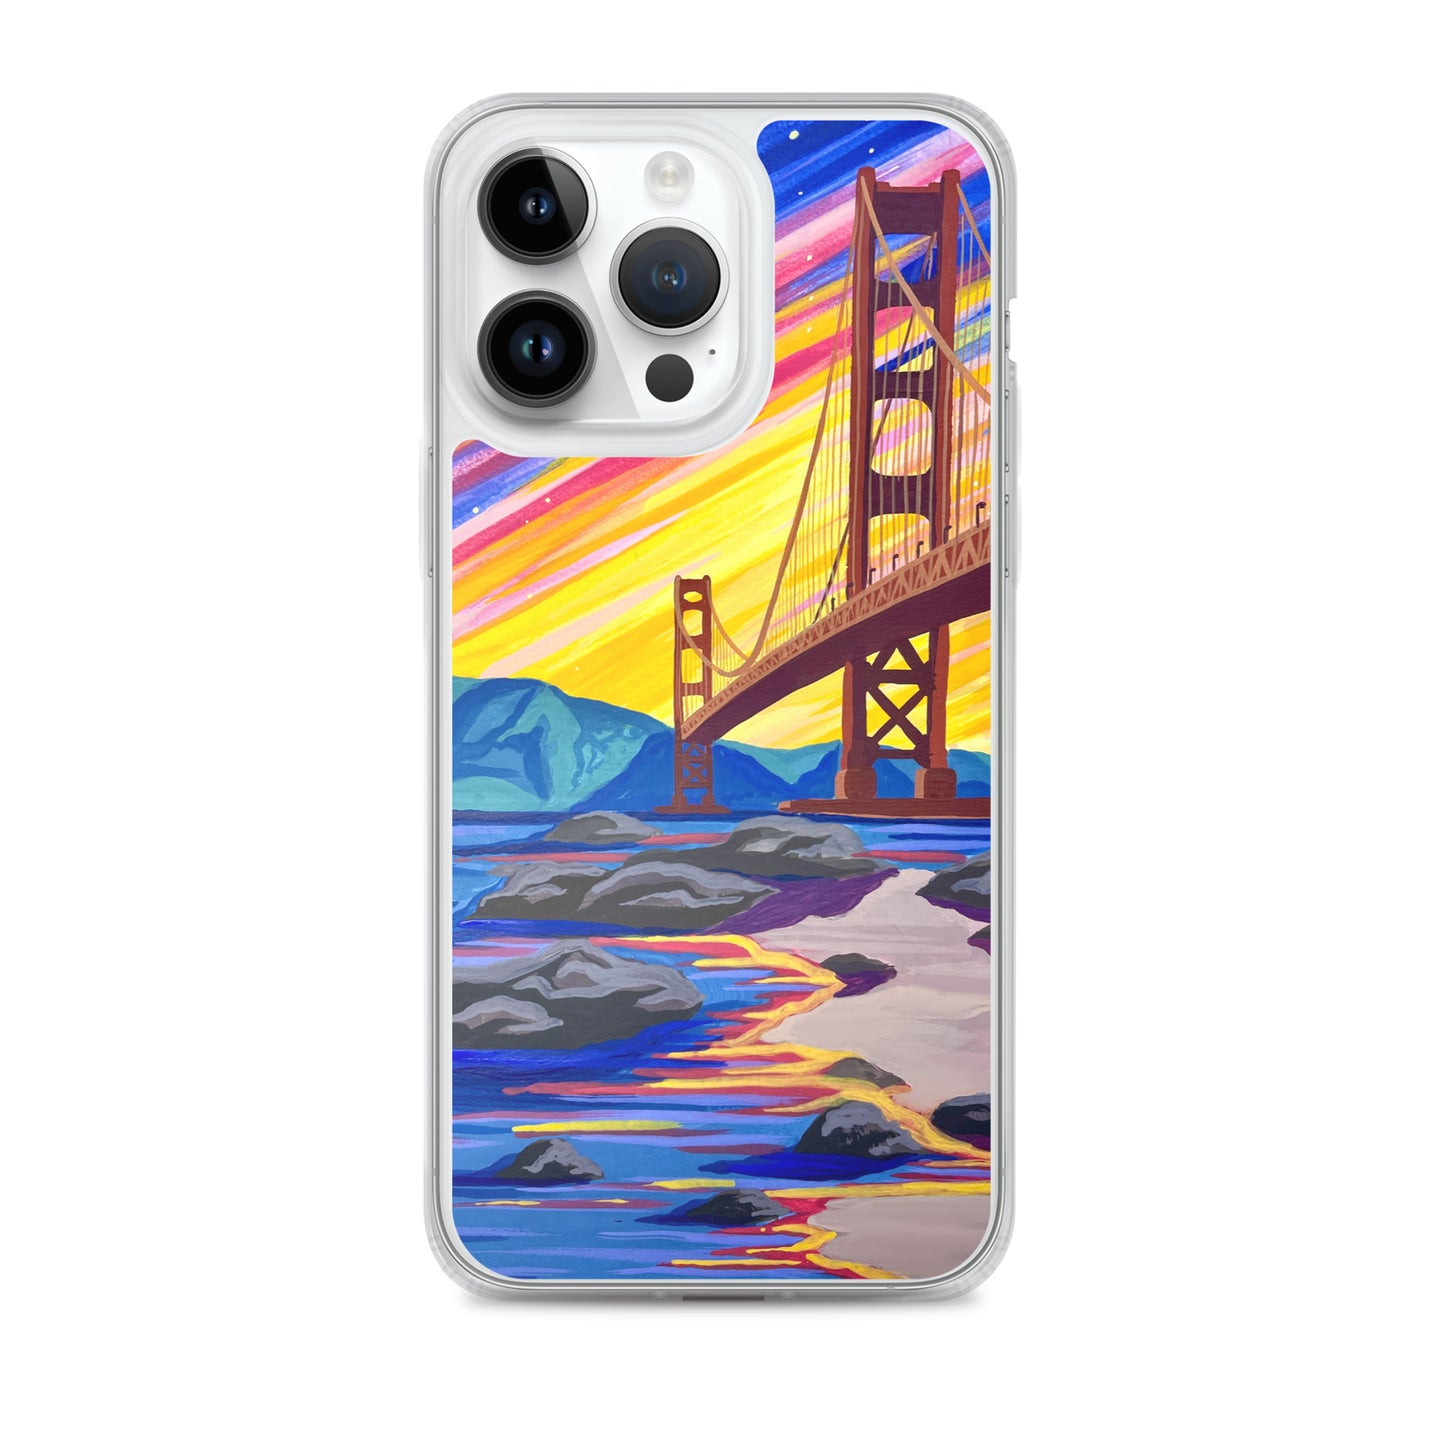 San Francisco iPhone Case